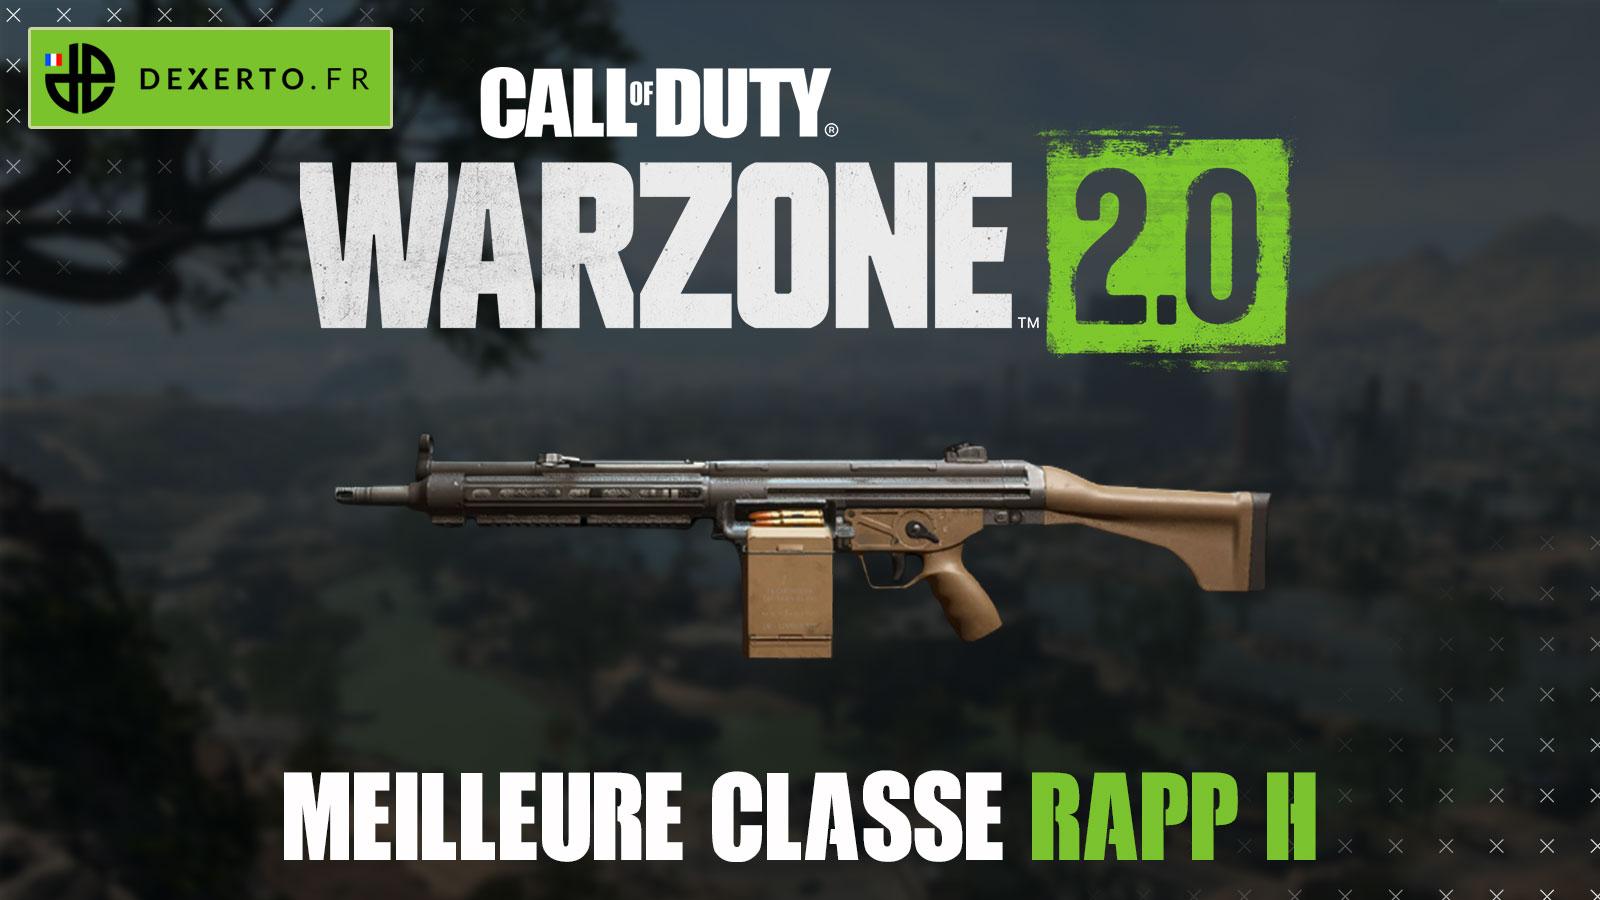 Warzone 2 Rapp H classe